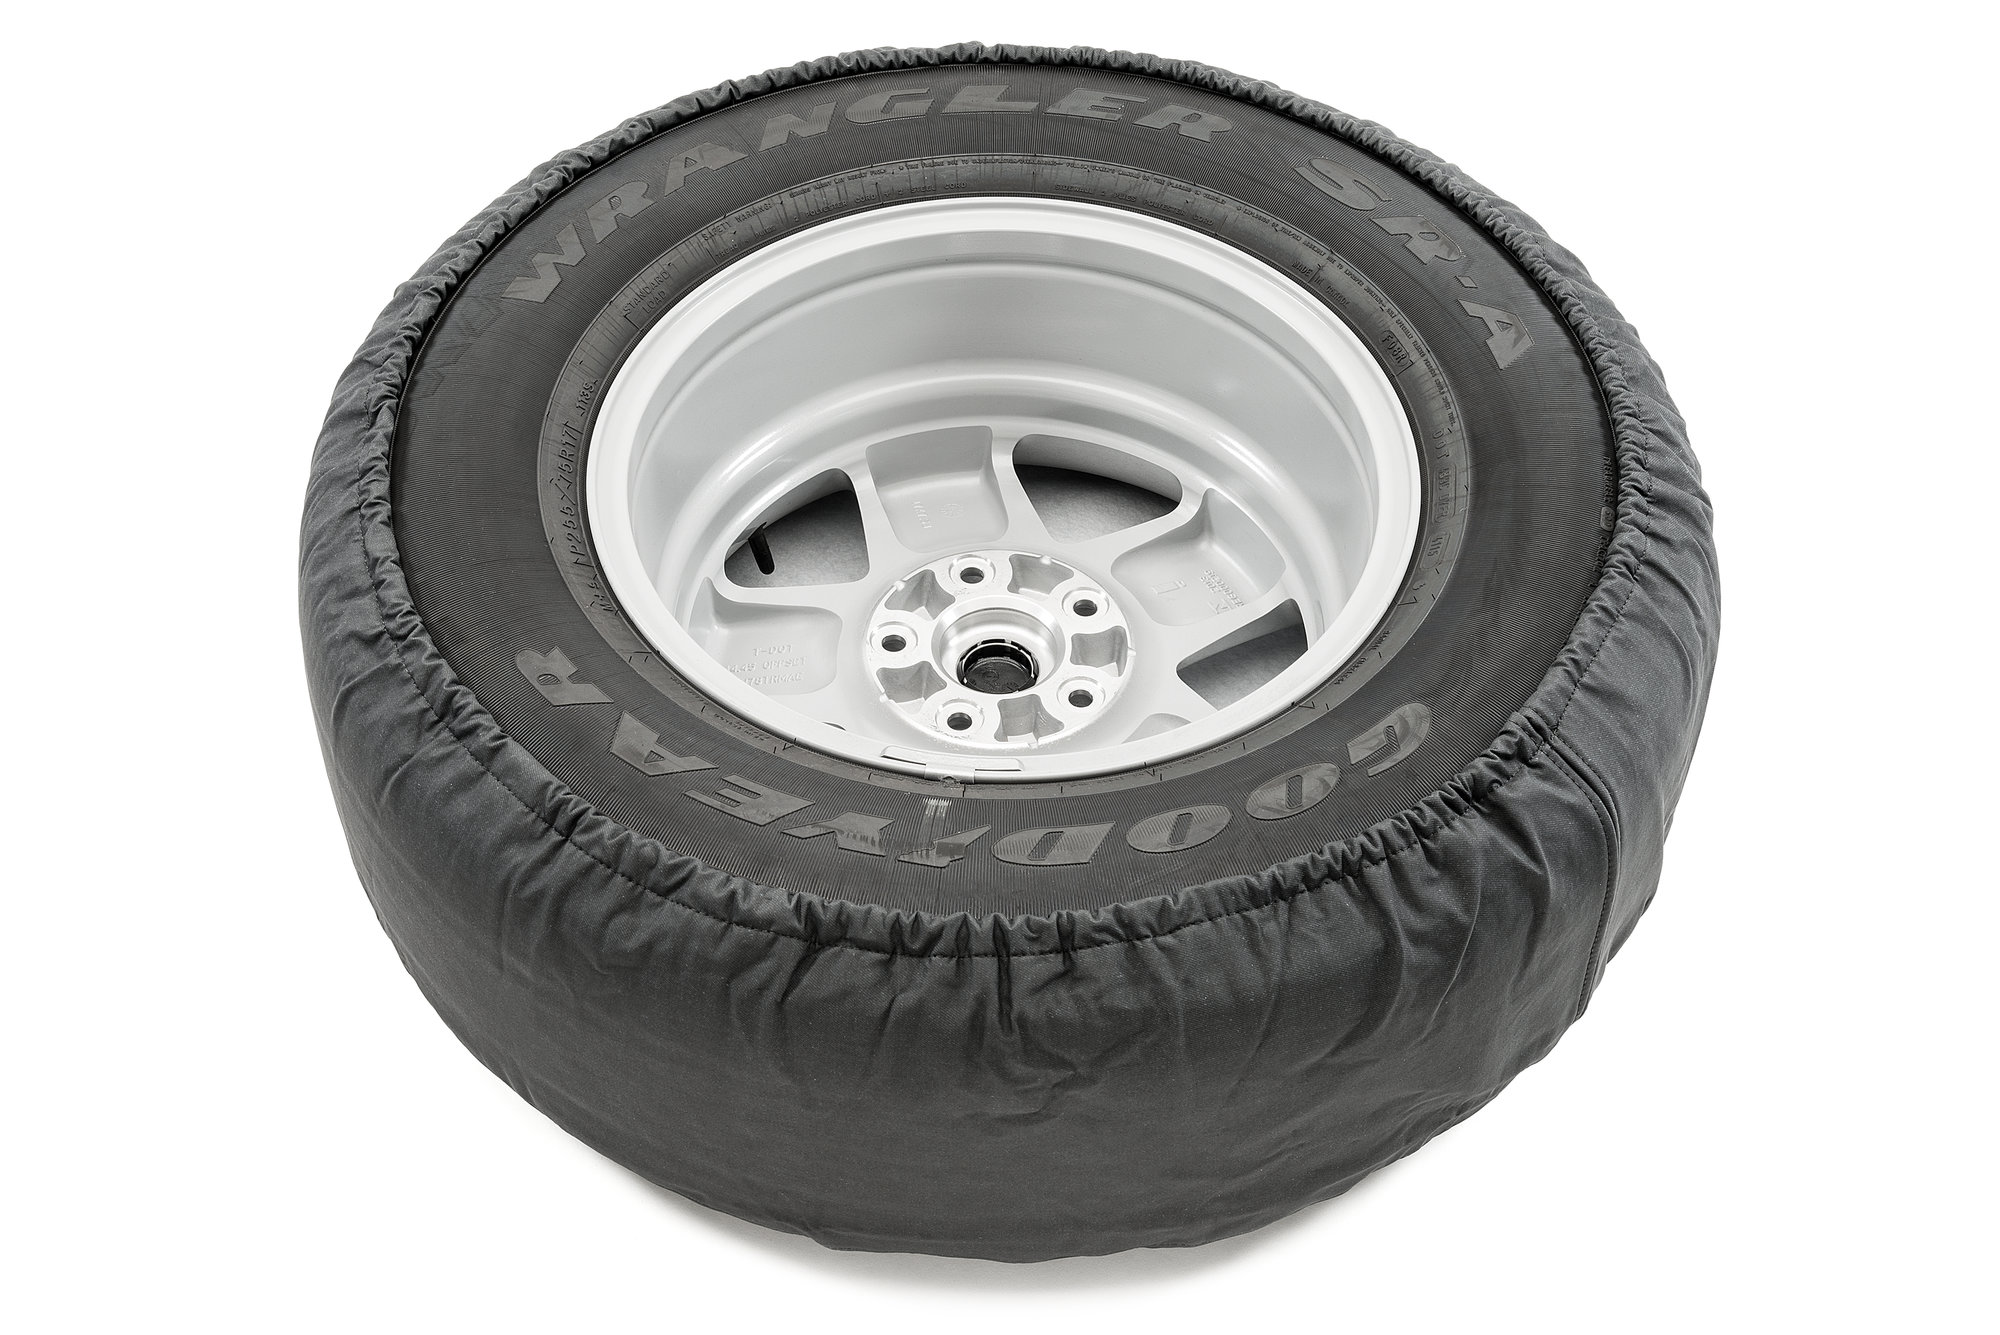 Mopar Jeep Logo Tire Covers in Black Denim with White Jeep Logo Quadratec